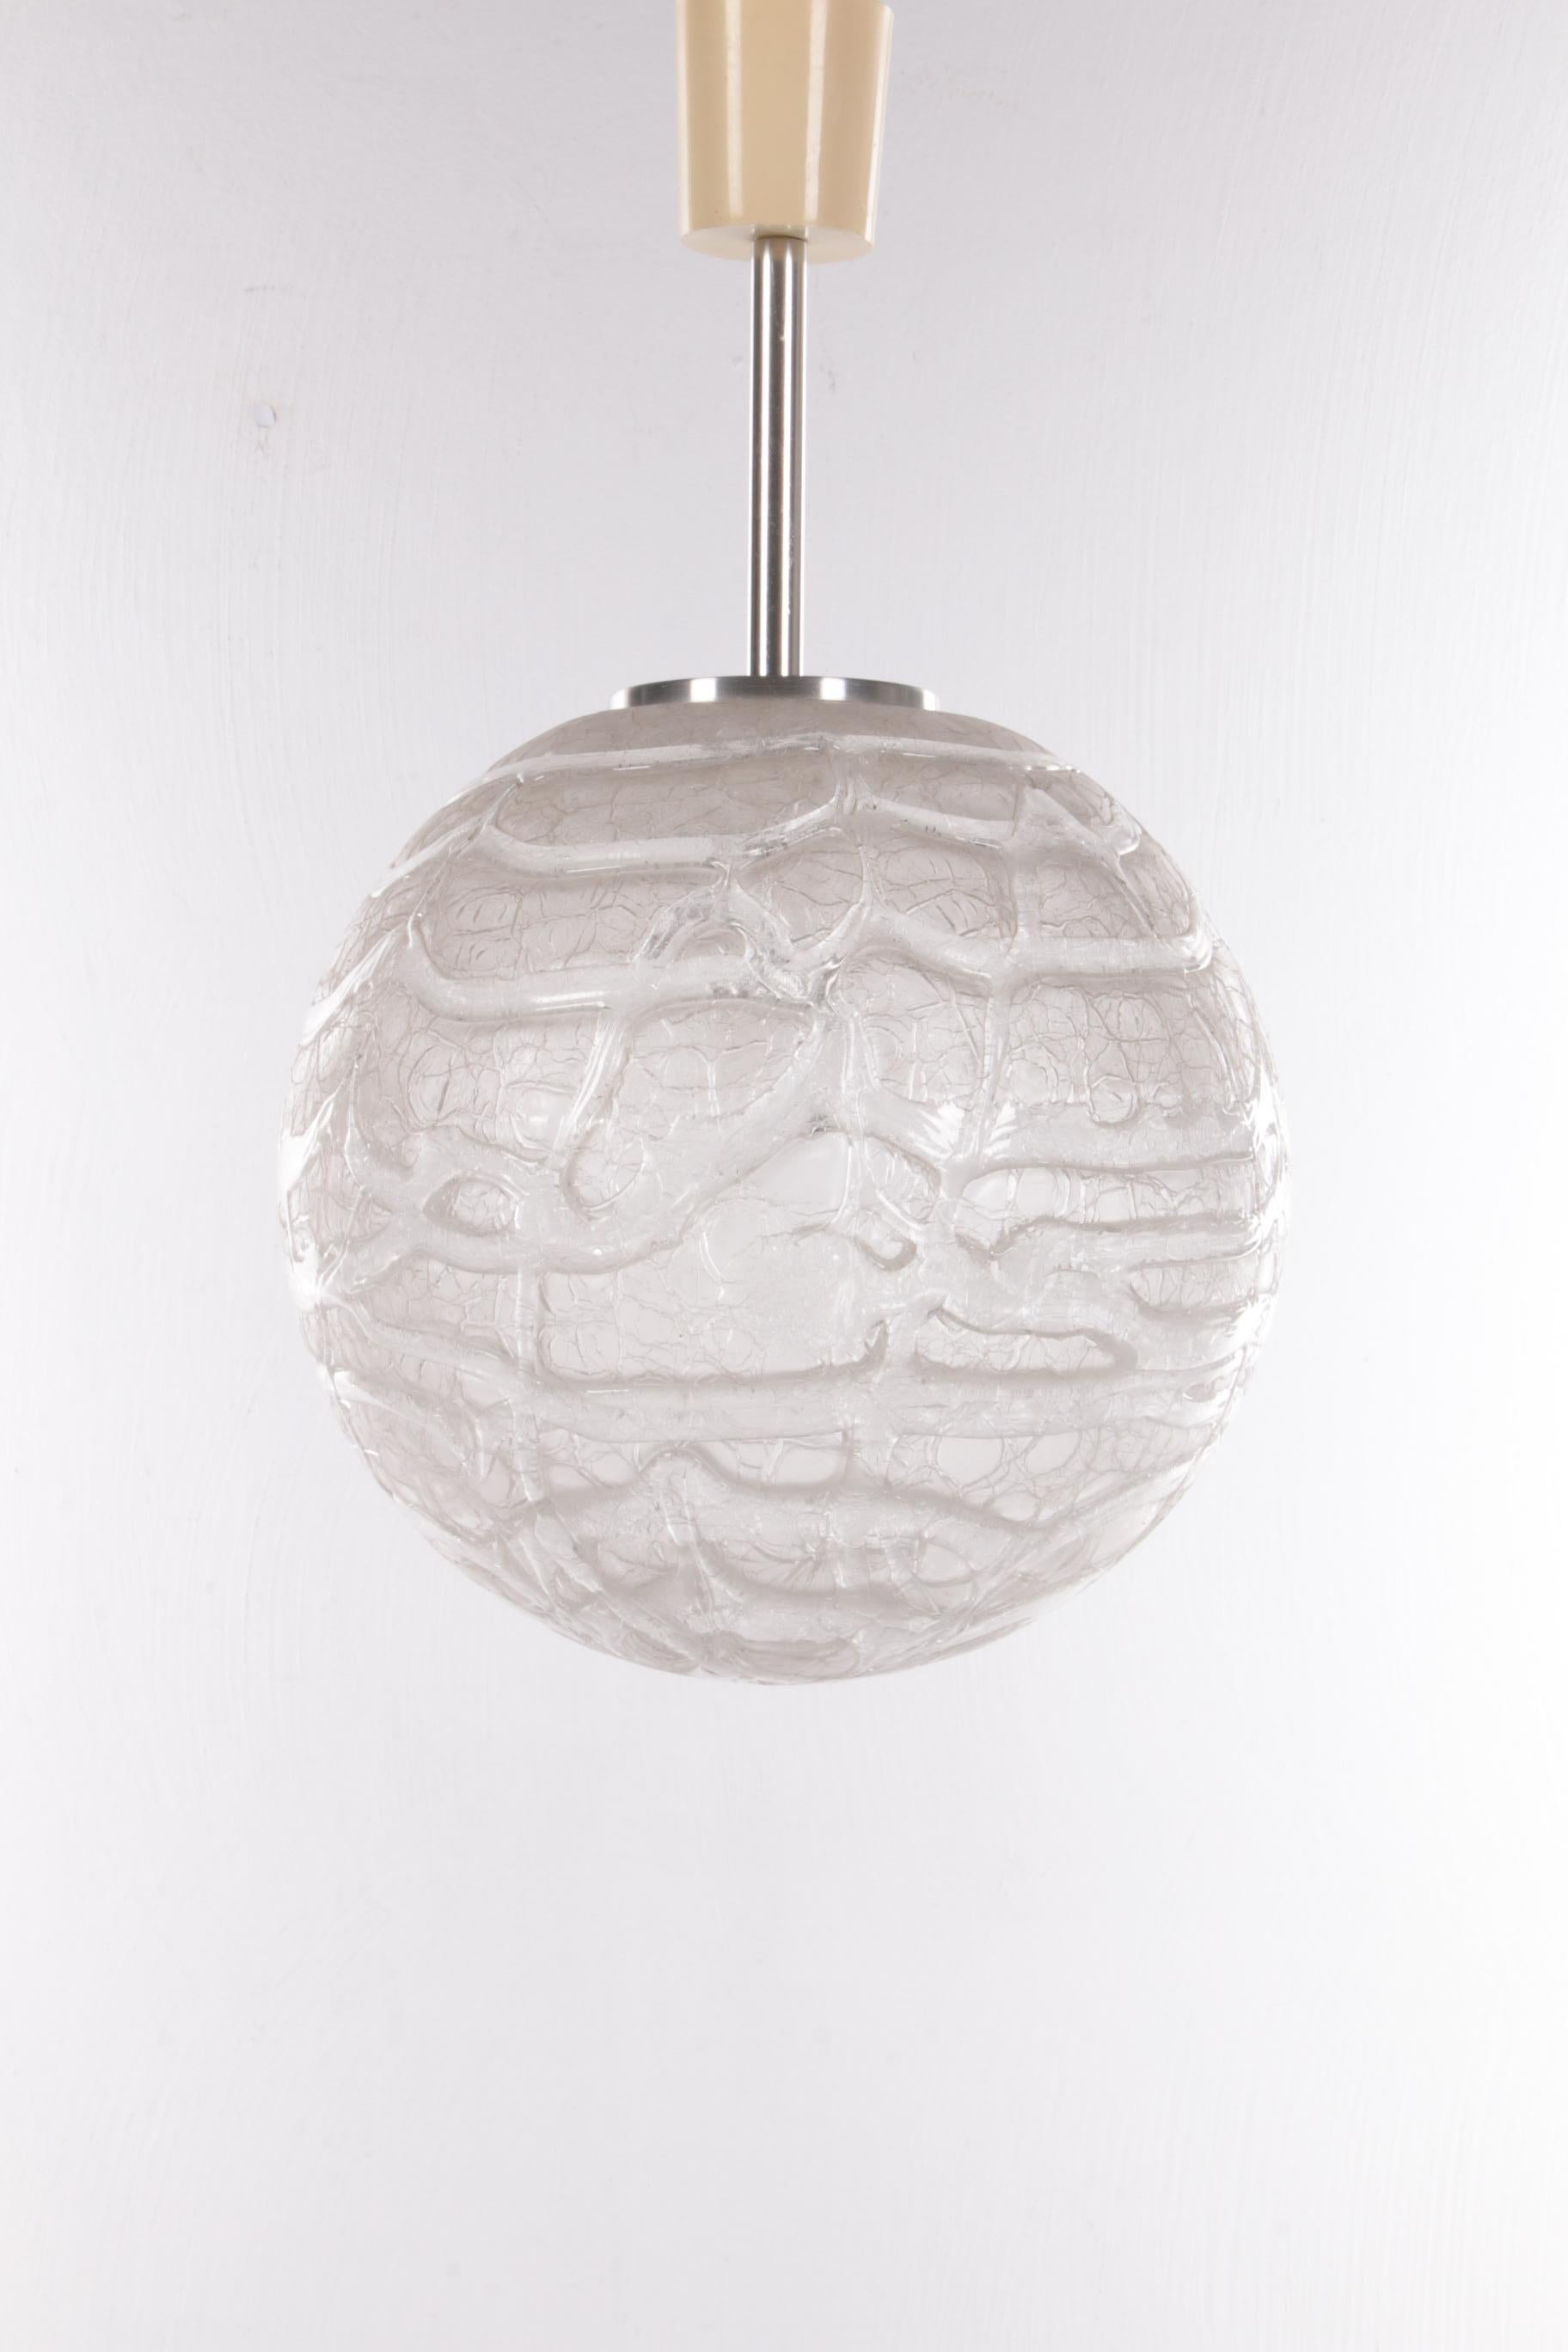 YS Glass Globe Pendant Lamp by Doria Leuchten Germany 1960 For Sale 5